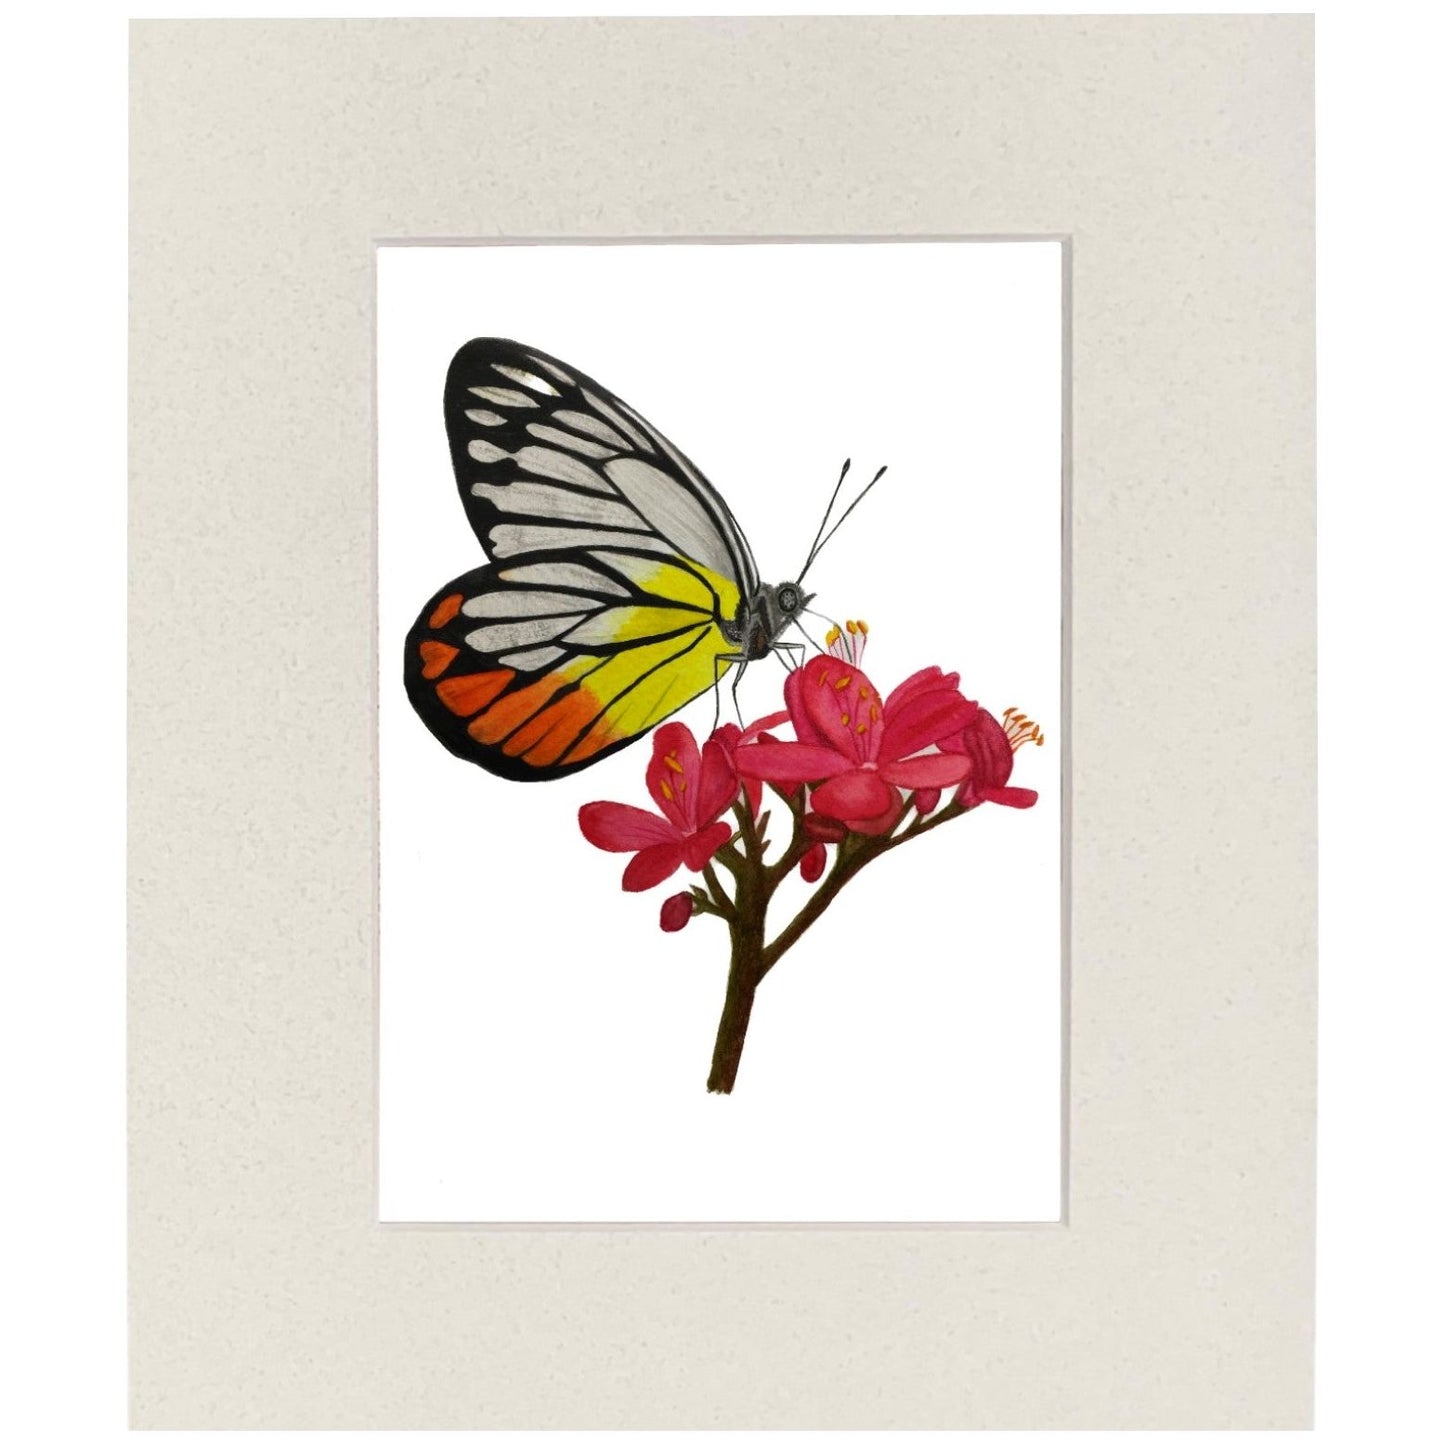 Painted Jezebel Butterfly